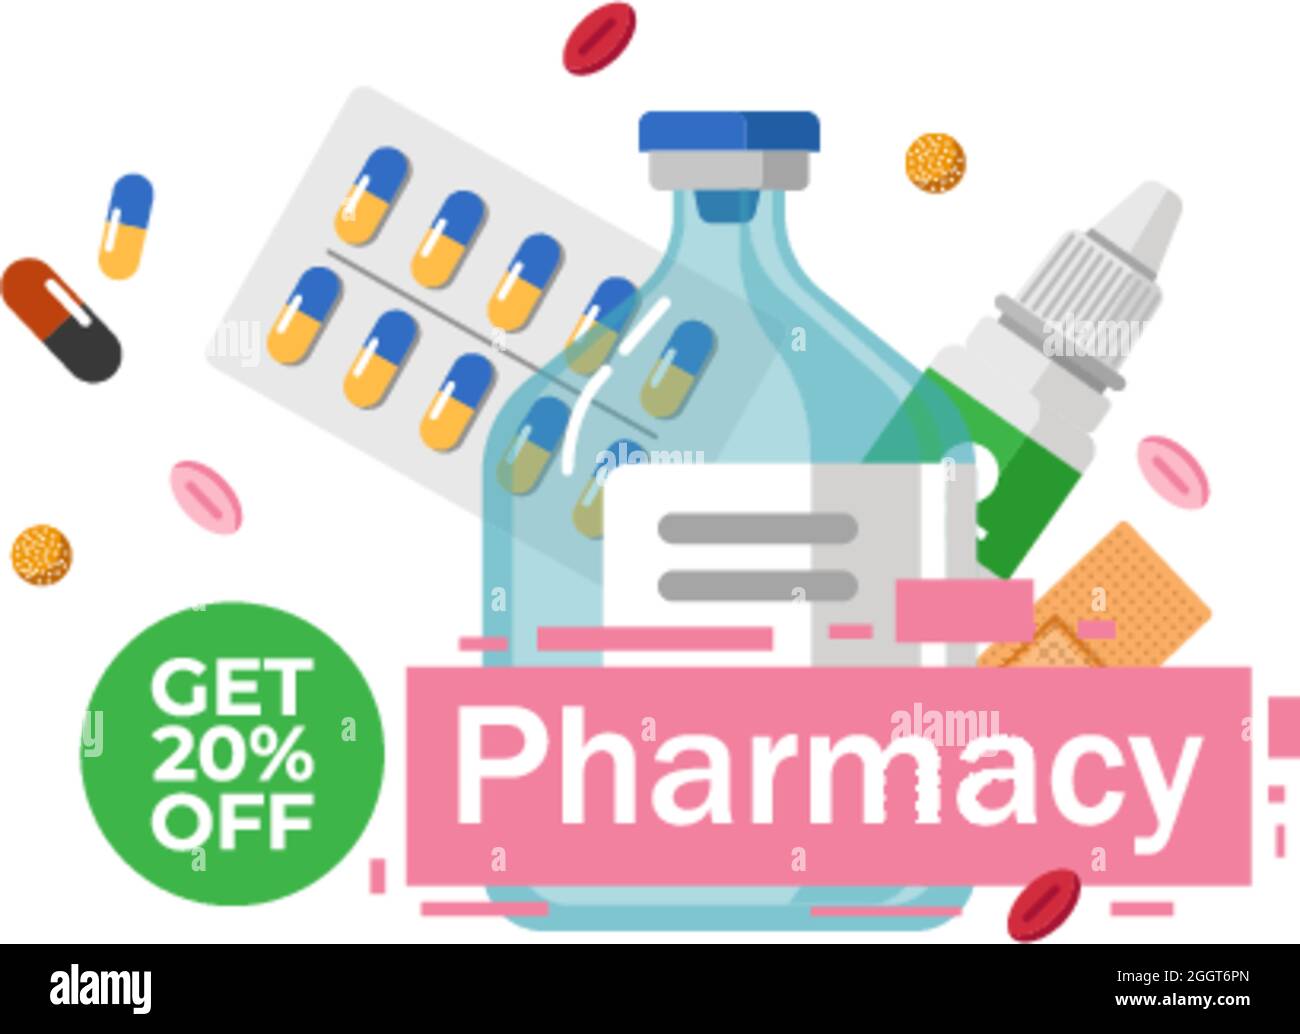 Pharmacy store discount on medicine, promo banner Stock Vector